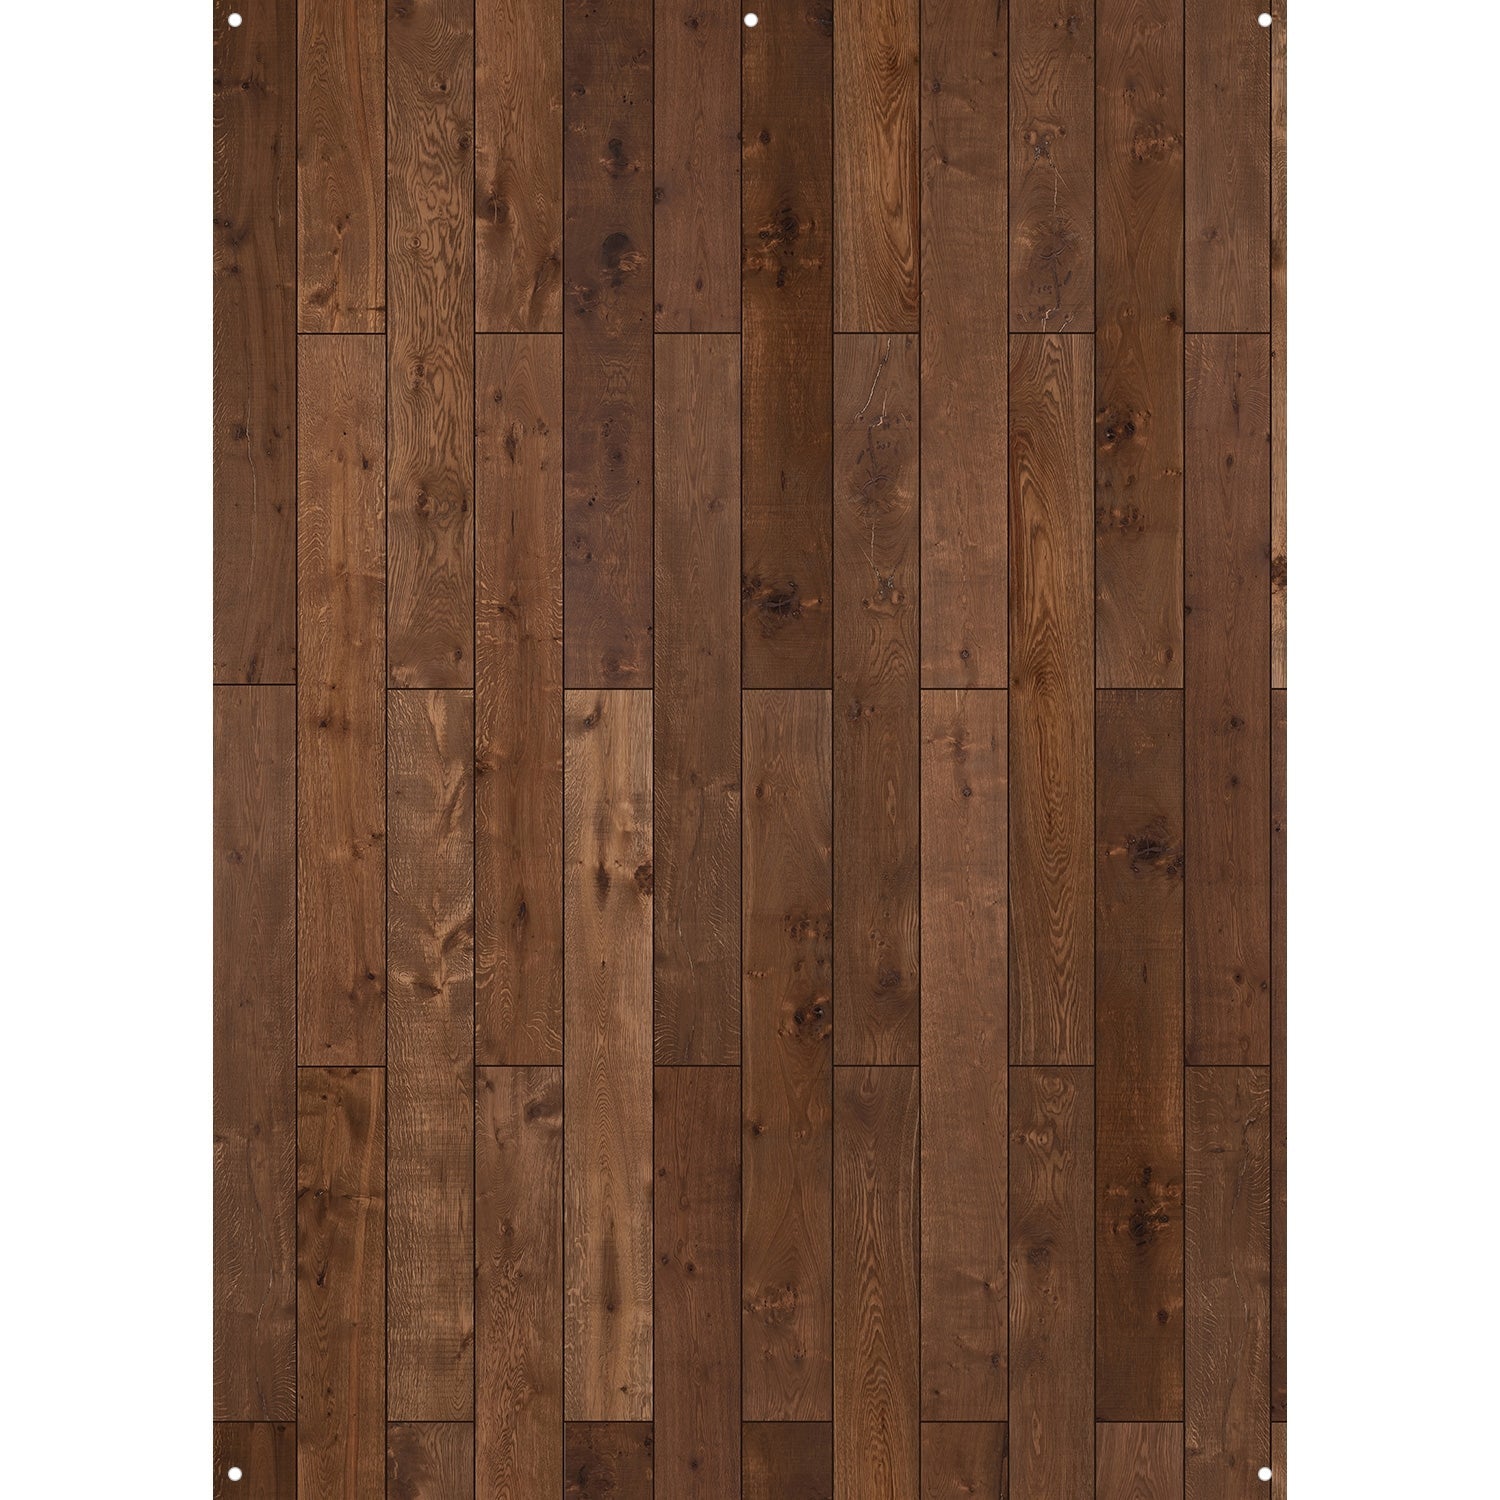 D0059-NW - X-Drop Backdrop – Natural Western Wood Panels (5' x 7') - X-Drop Backdrop – Natural Western Wood Panels (5' x 7') - D0059-NW - X-Drop Backdrop – Natural Western Wood Panels (5' x 7')